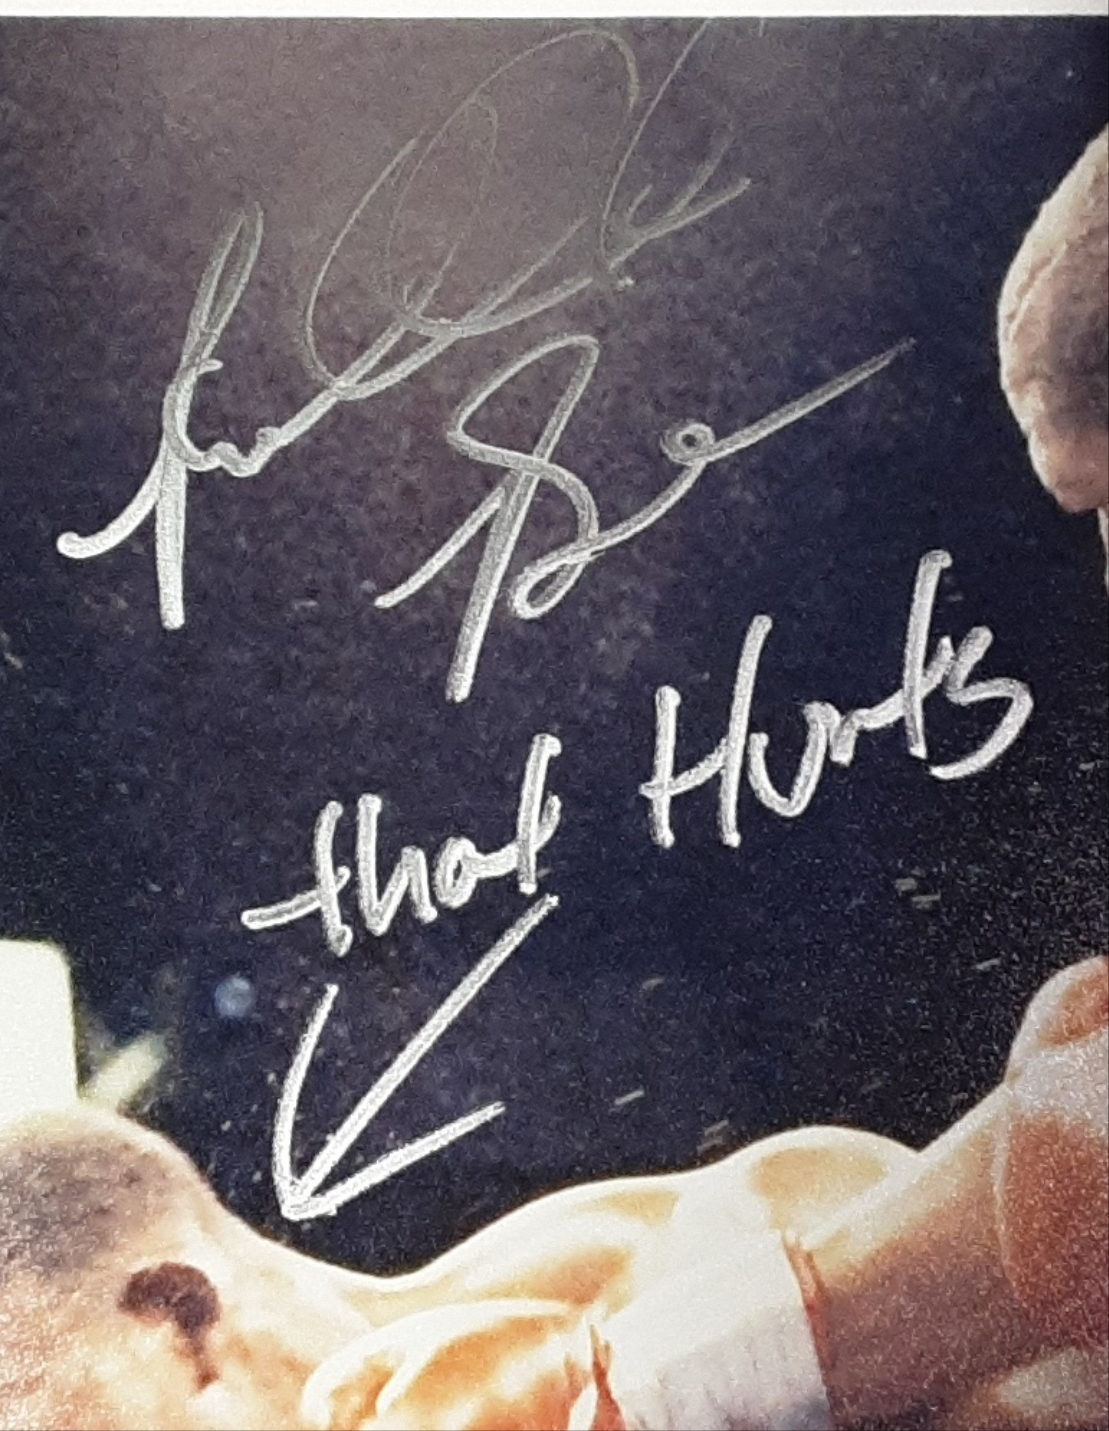 Riddick Bowe Signed Framed 8x10 Photo Autographed with Inscription JSA